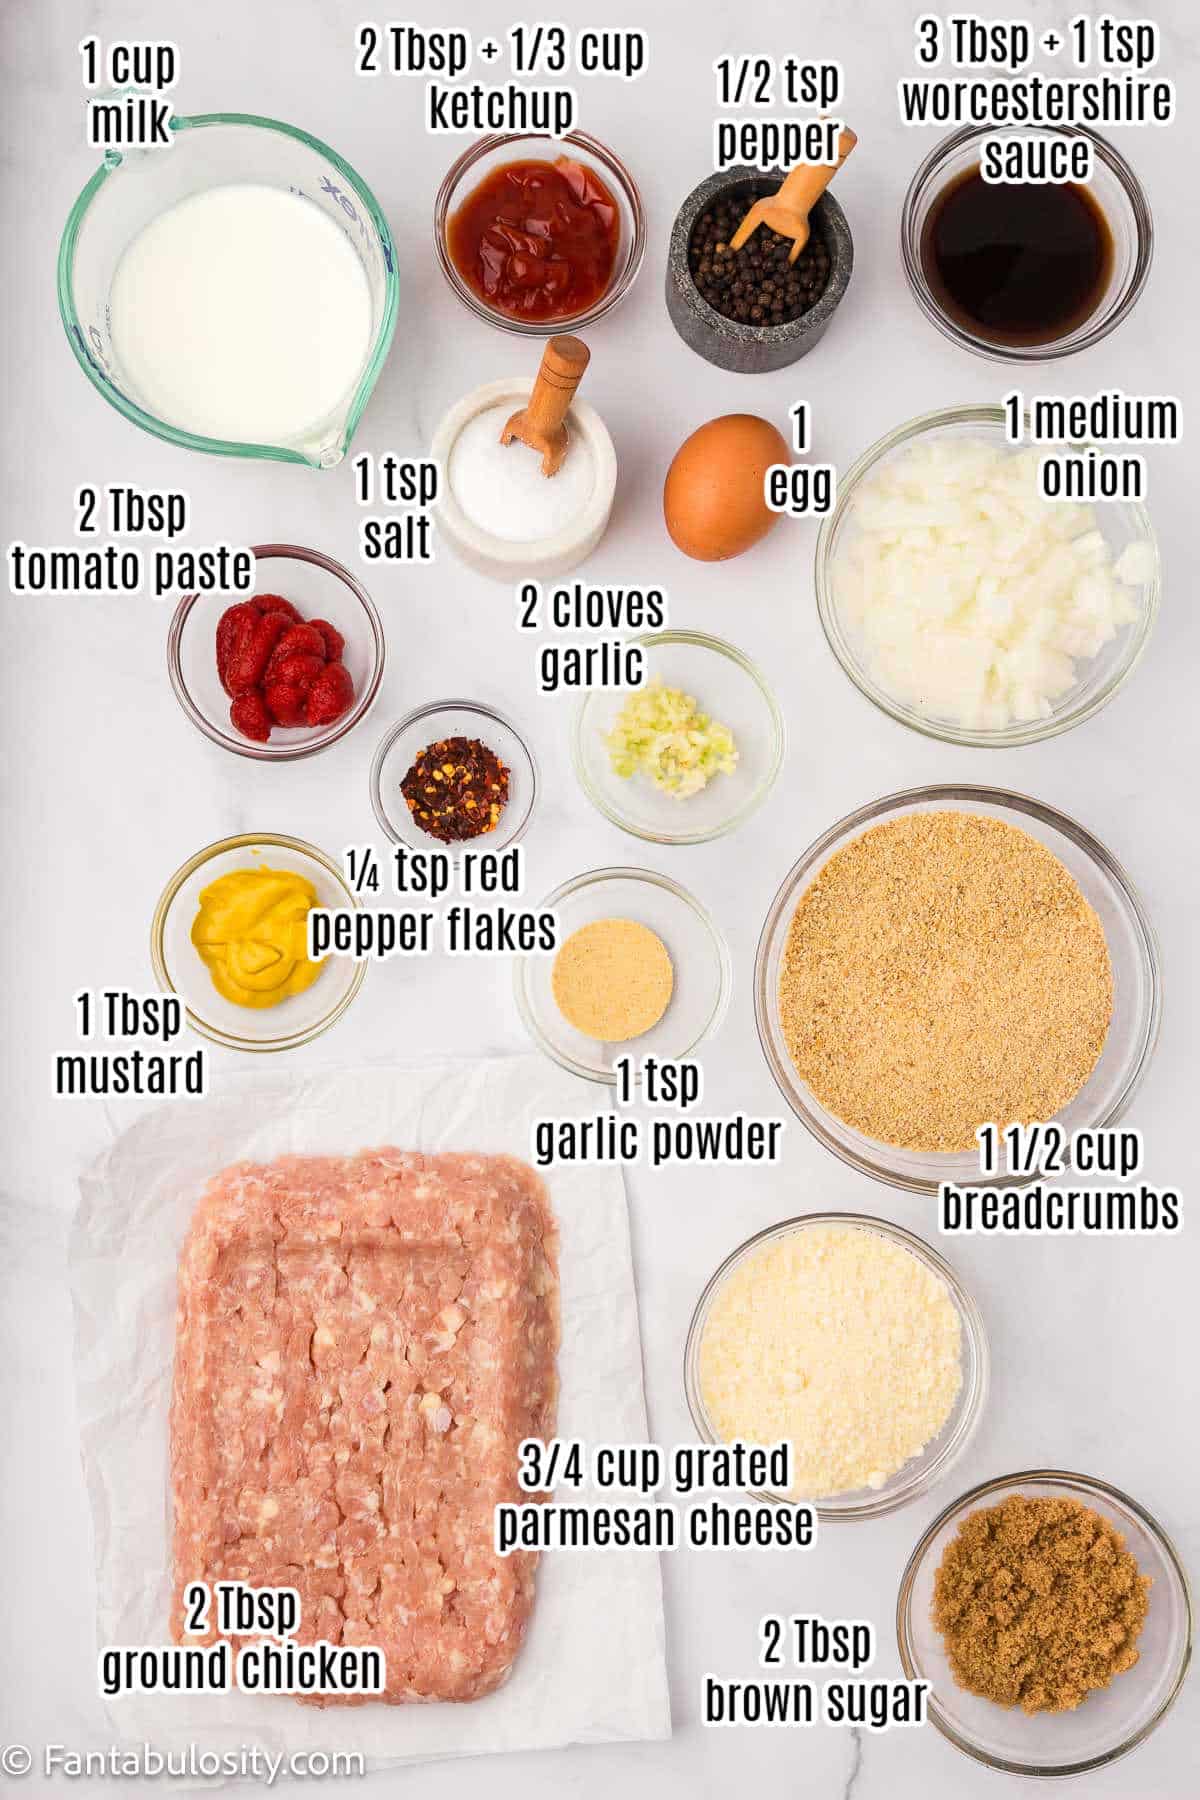 Labeled ingredients for chicken meatloaf.